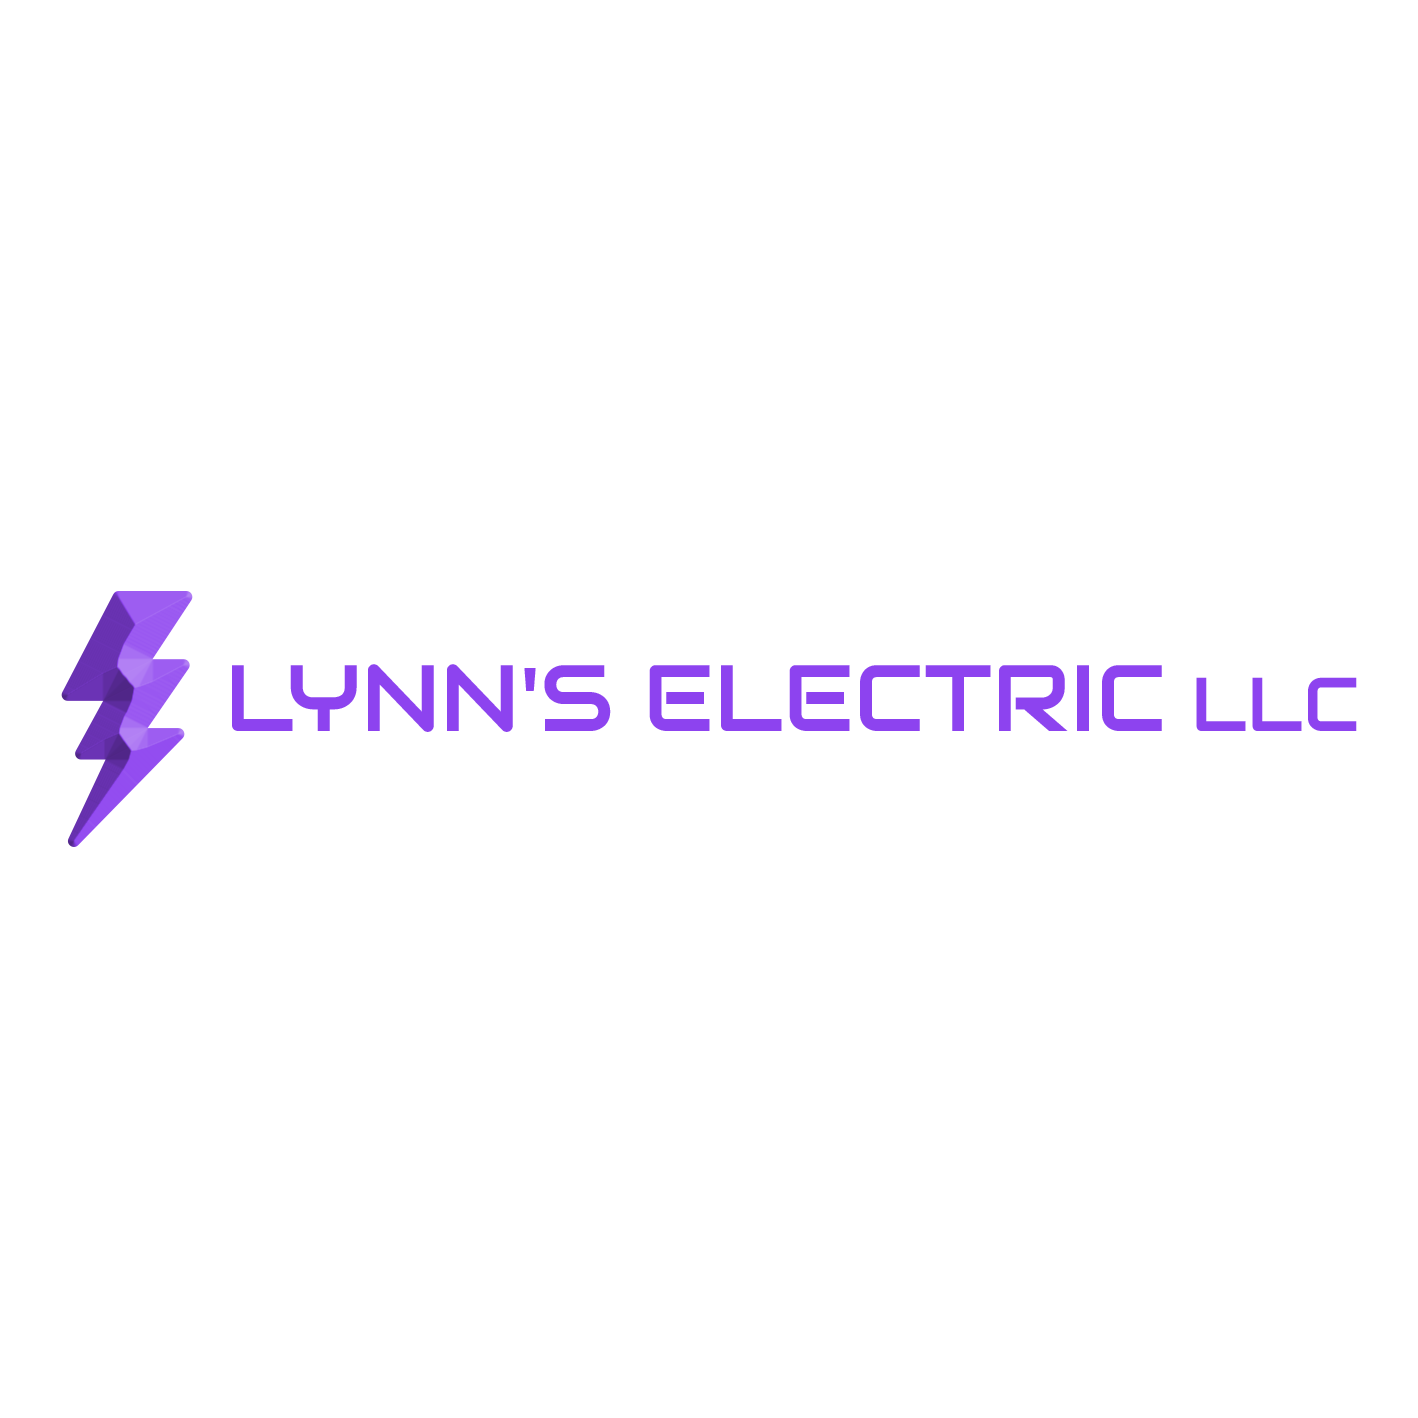 Lynn's Electric LLC